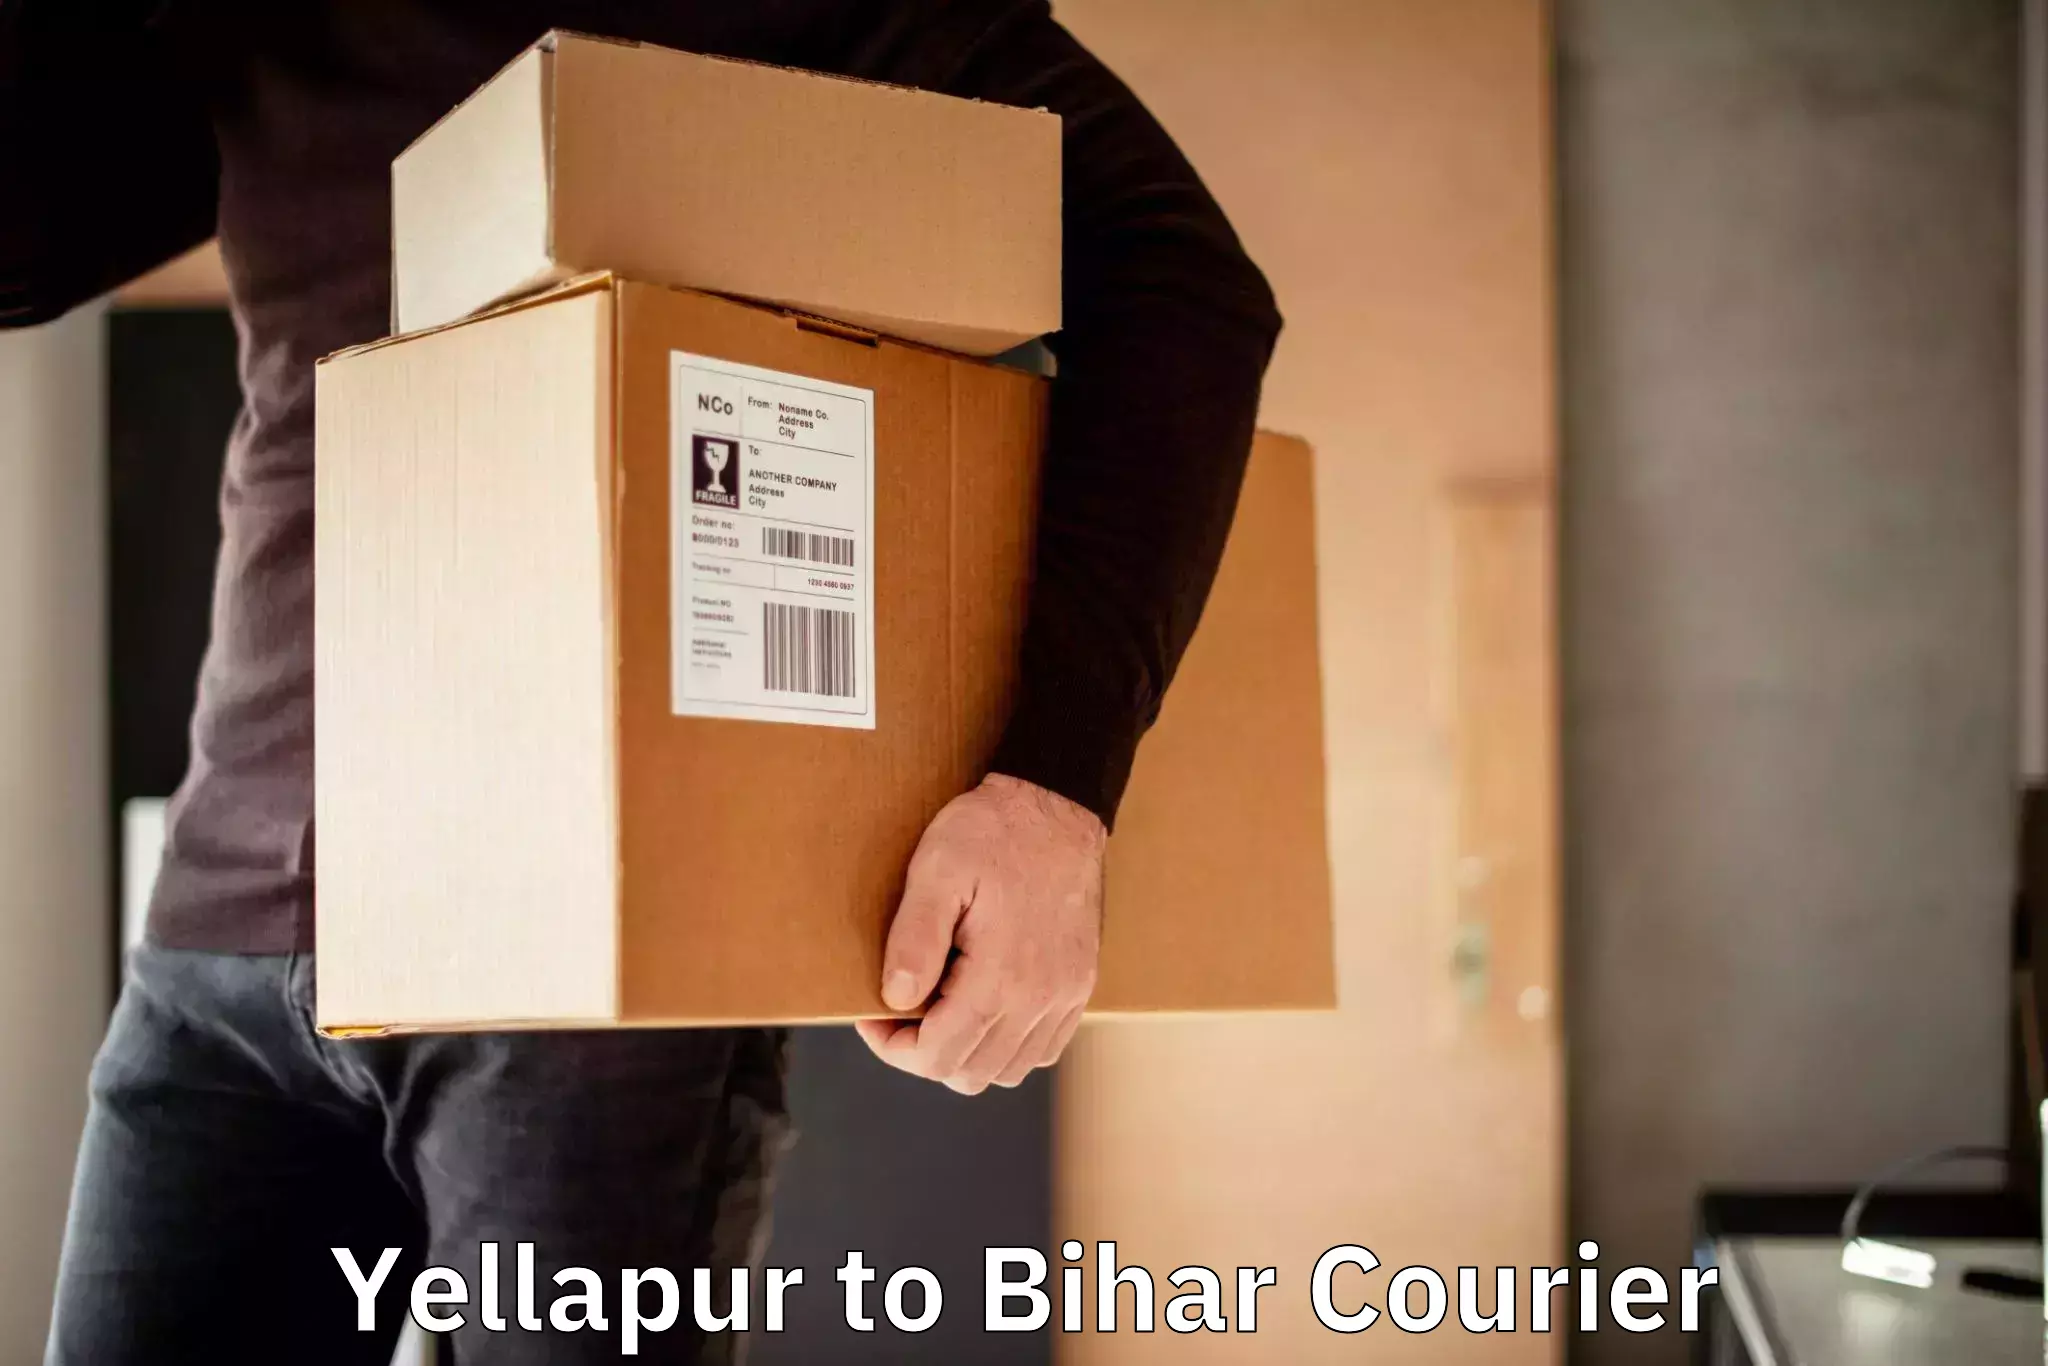 Next-day freight services Yellapur to Gaya